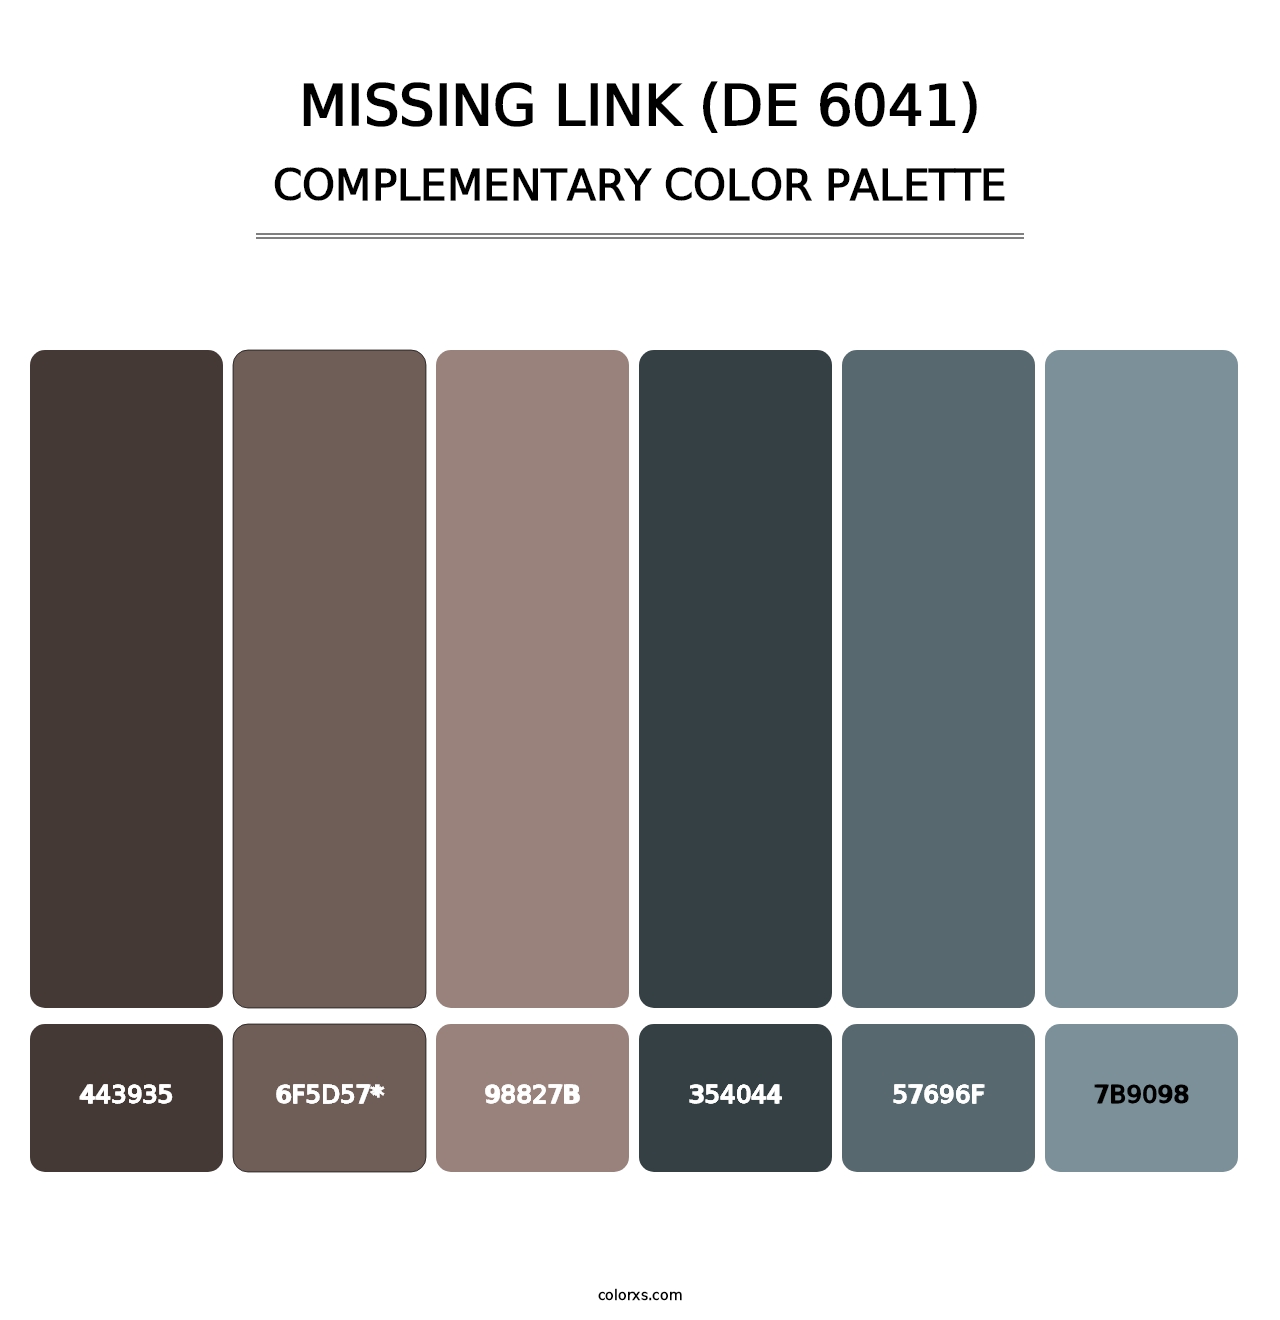 Missing Link (DE 6041) - Complementary Color Palette